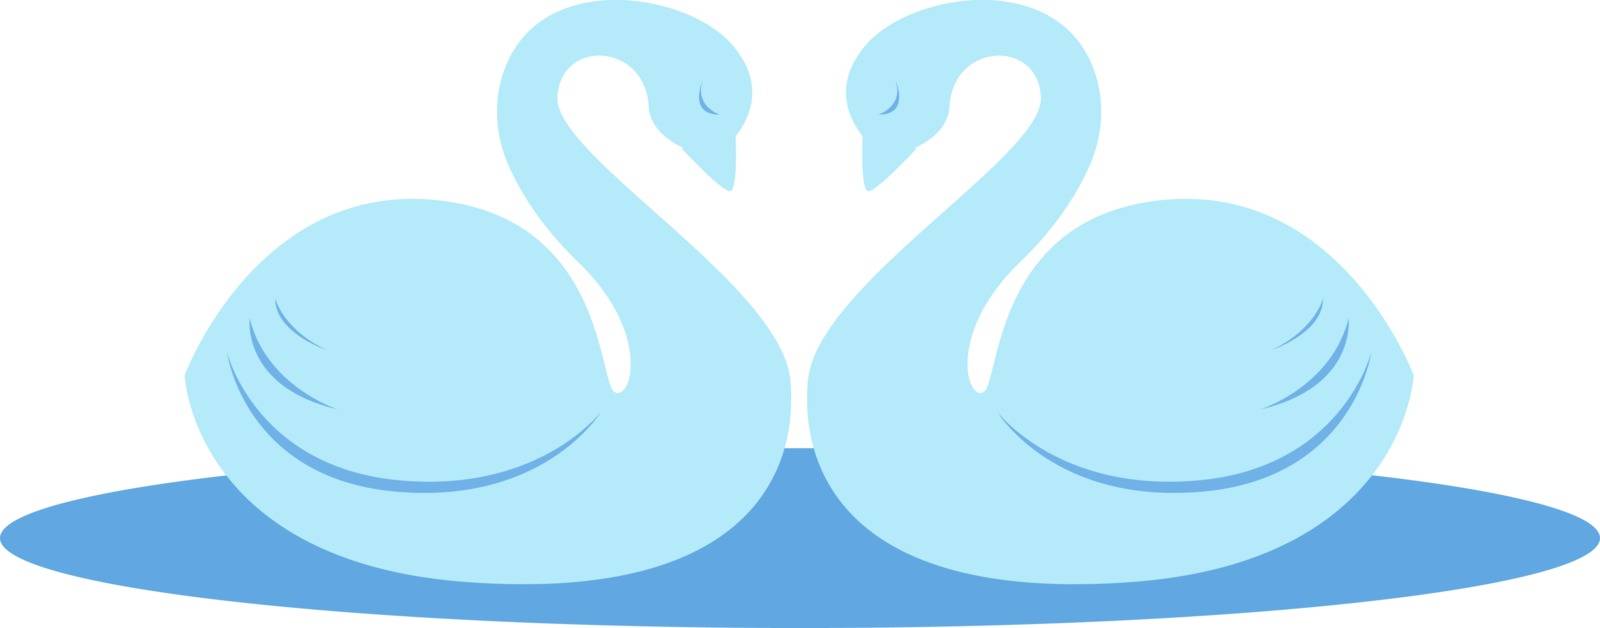 Pair of swans, illustration, vector on white background. by Morphart